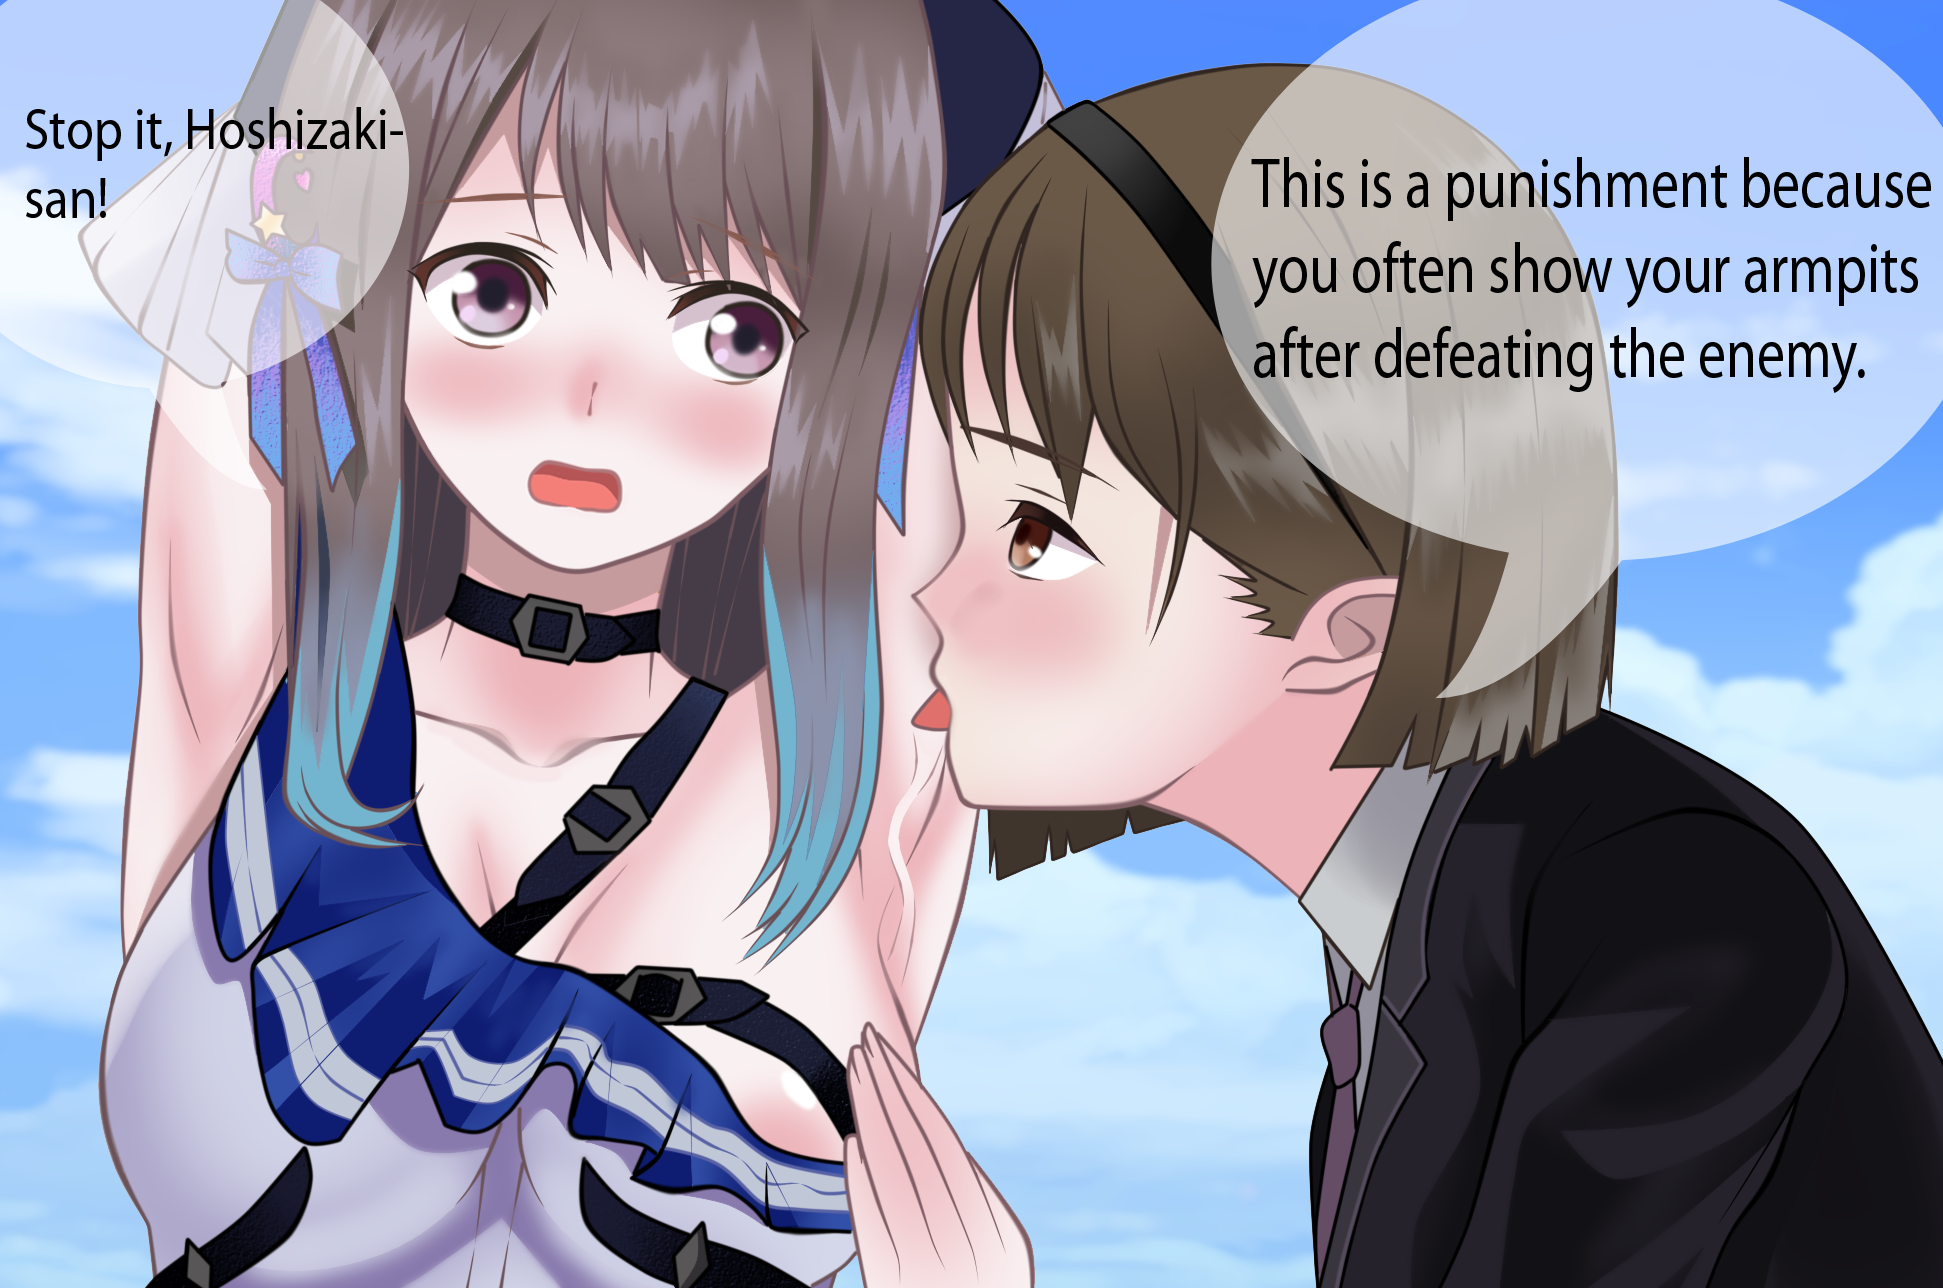 Anime armpit licking